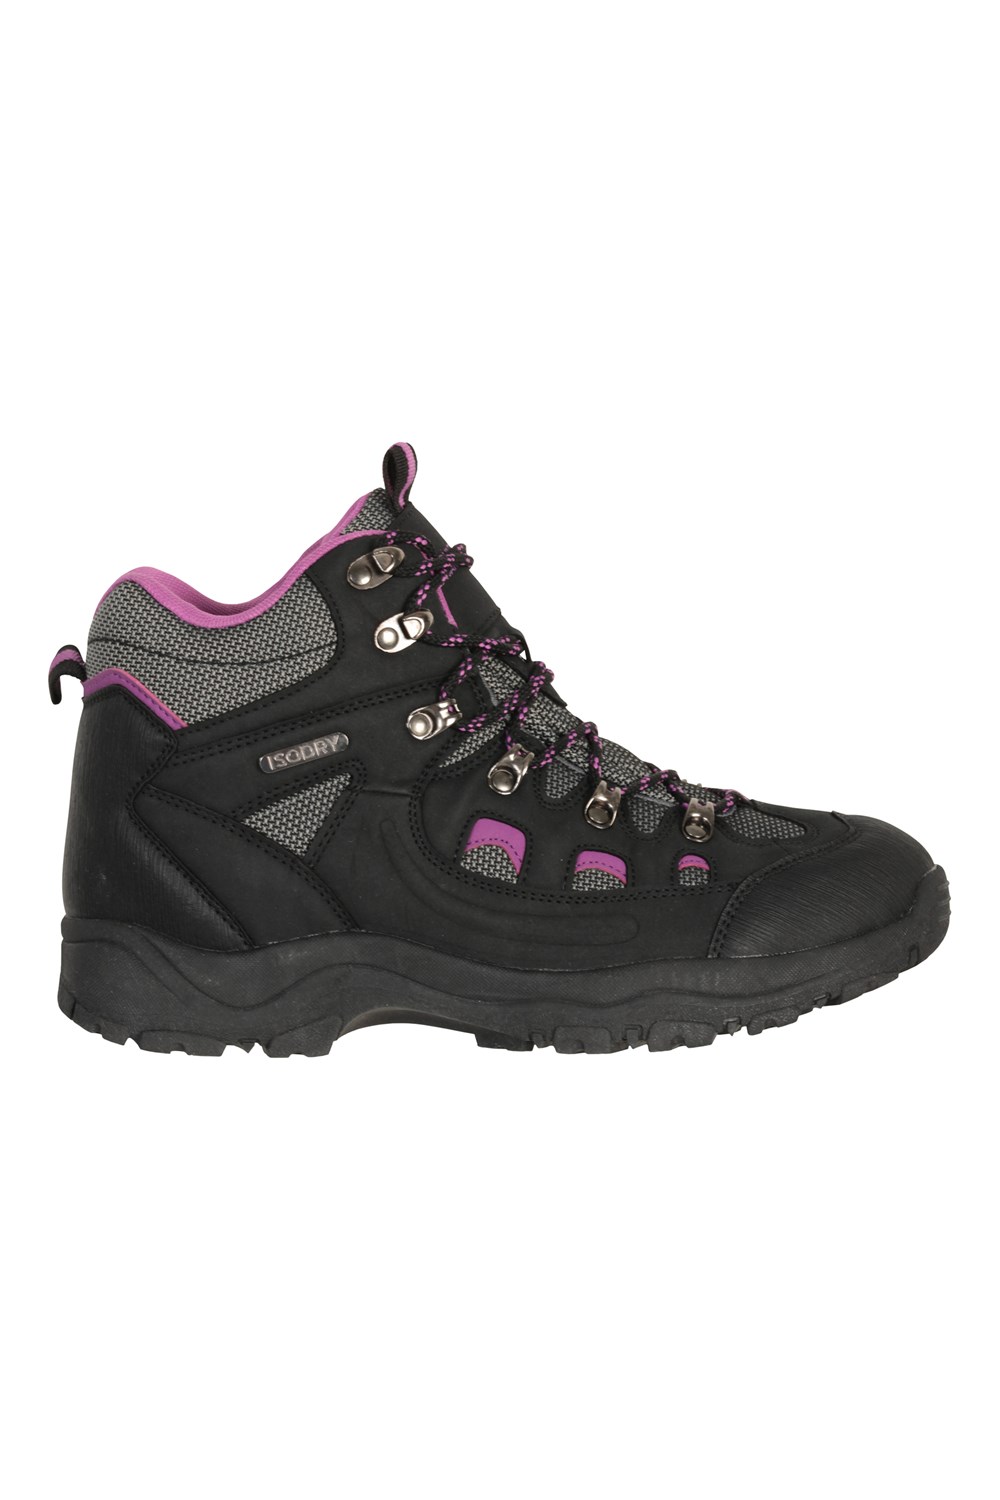 Mountain Warehouse Womens Waterproof Hiking Boots Walking Trekking ...